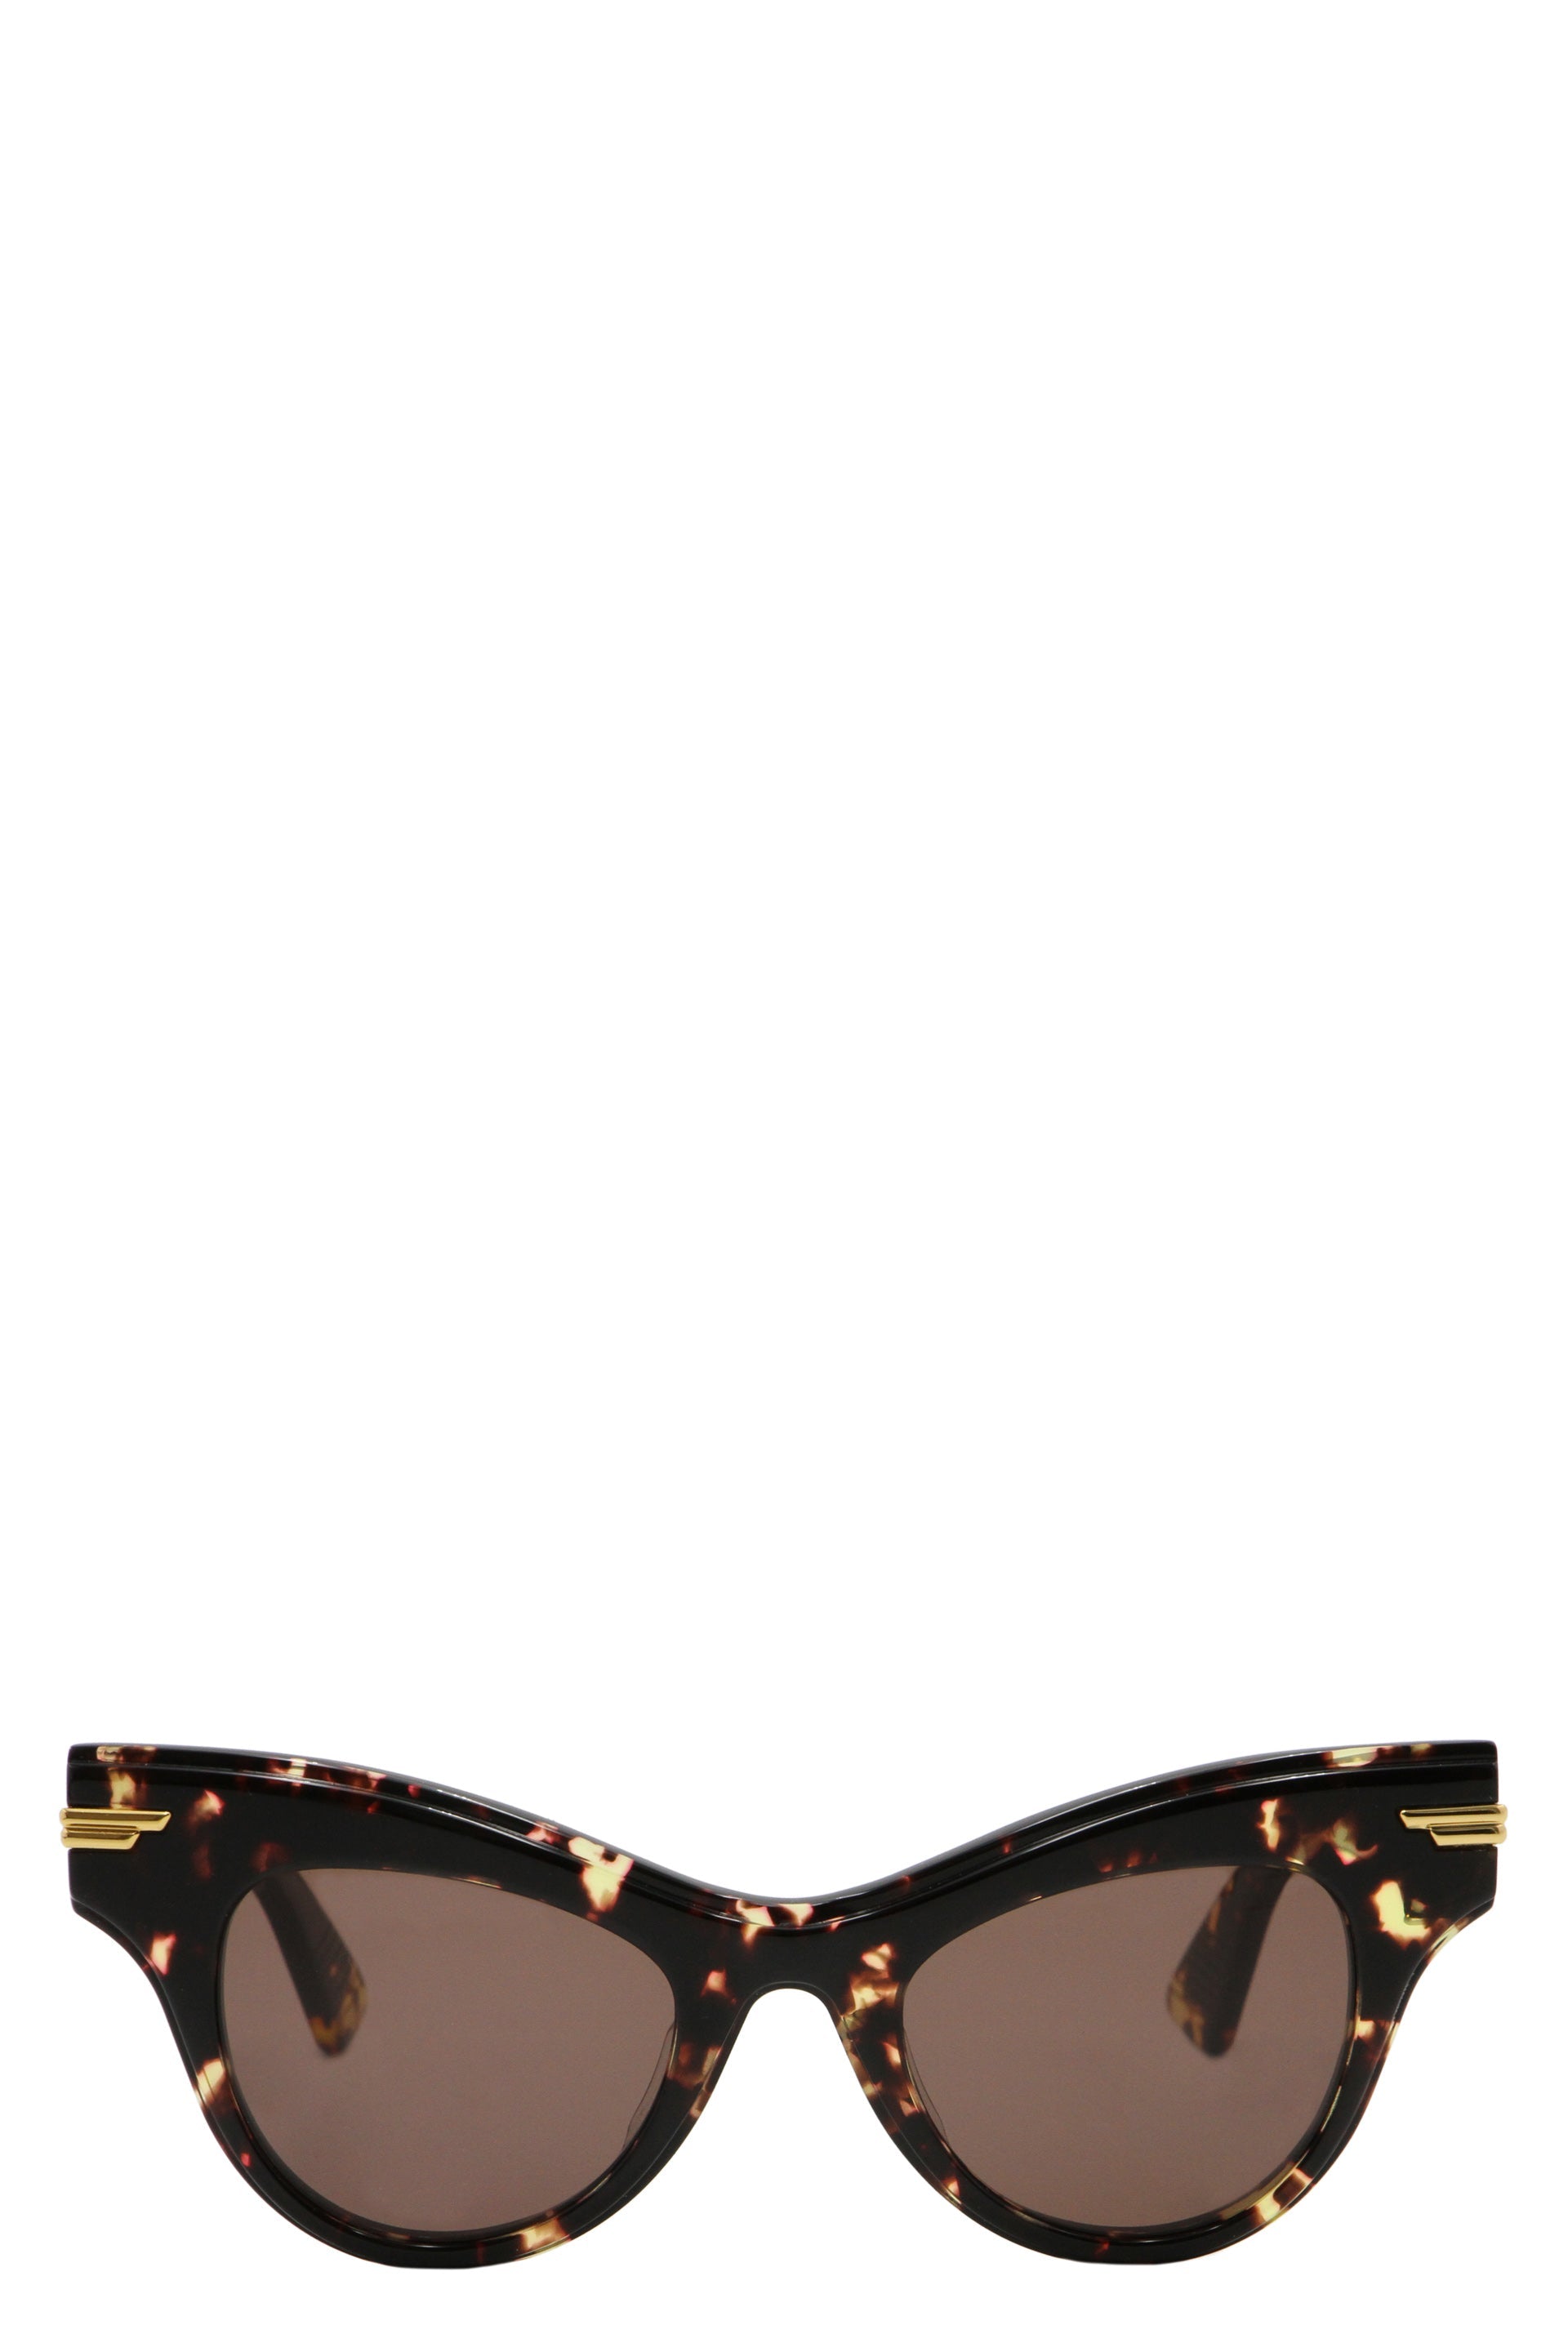 Cat-eye sunglasses-Accessoires-Bottega Veneta-OUTLET-SALE-TU-ARCHIVIST